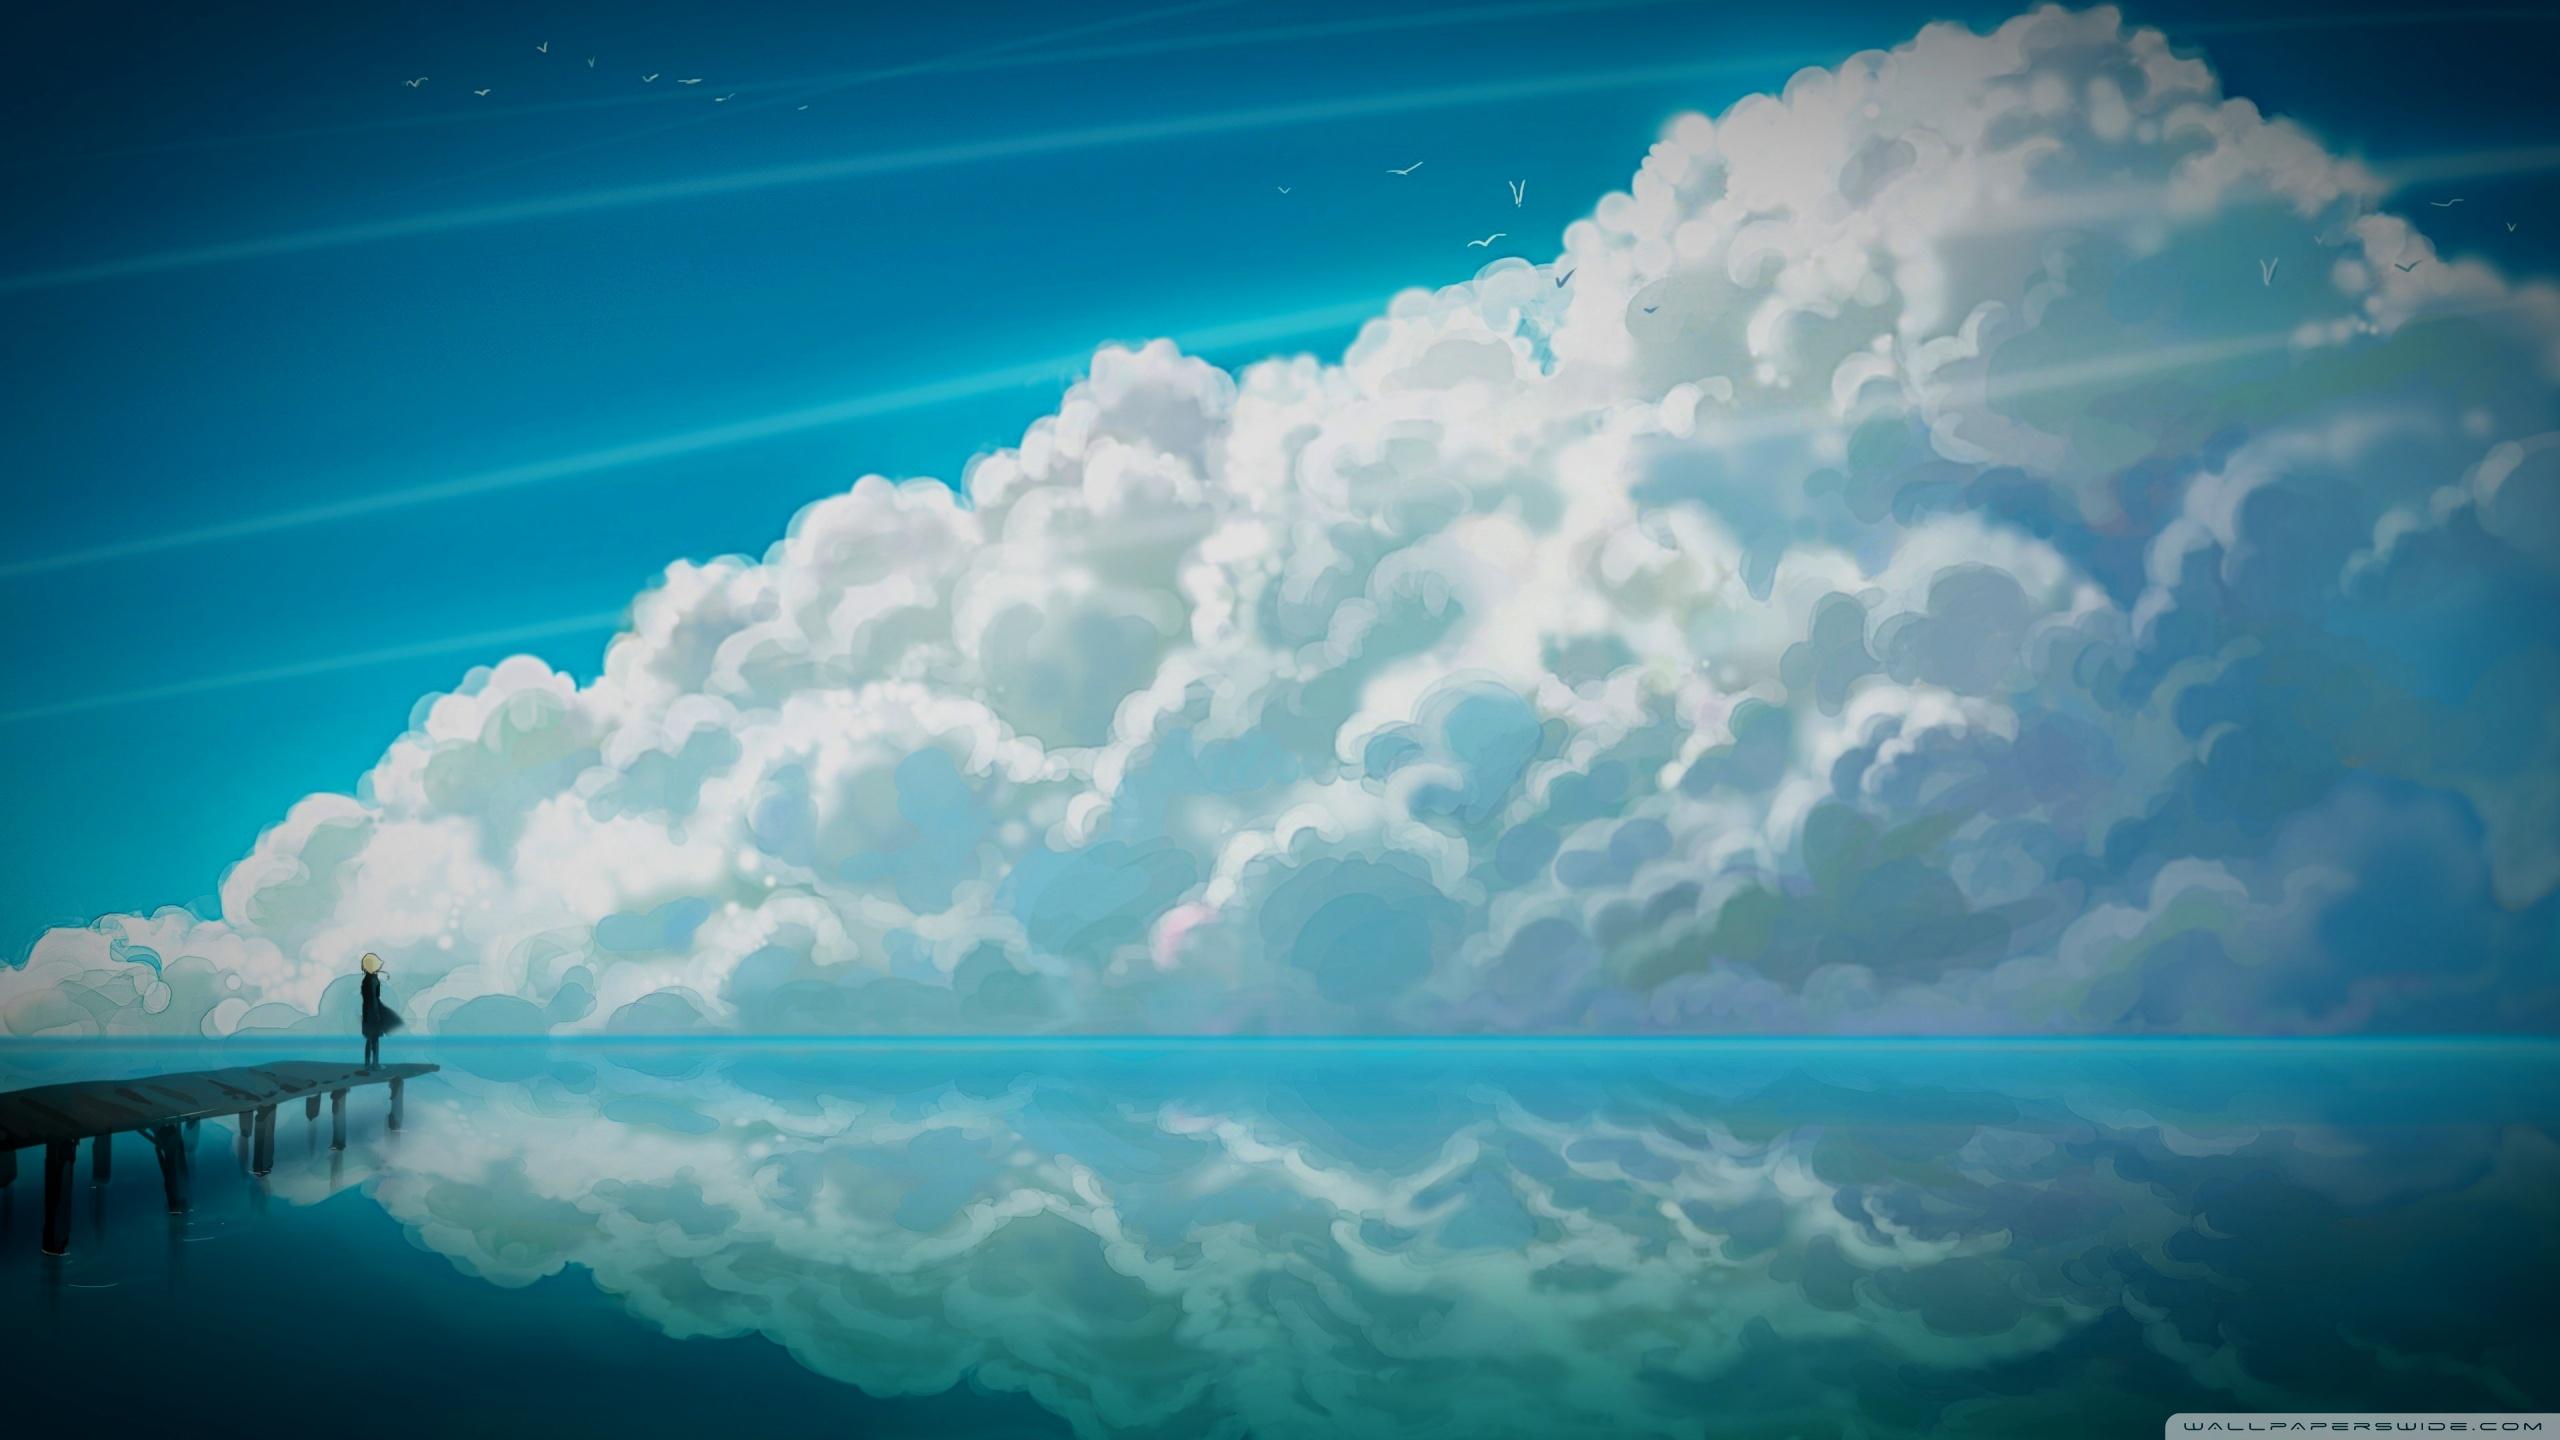 Wallpapers 2560 X 1440 - Anime Sky Wallpaper 4k - HD Wallpaper 